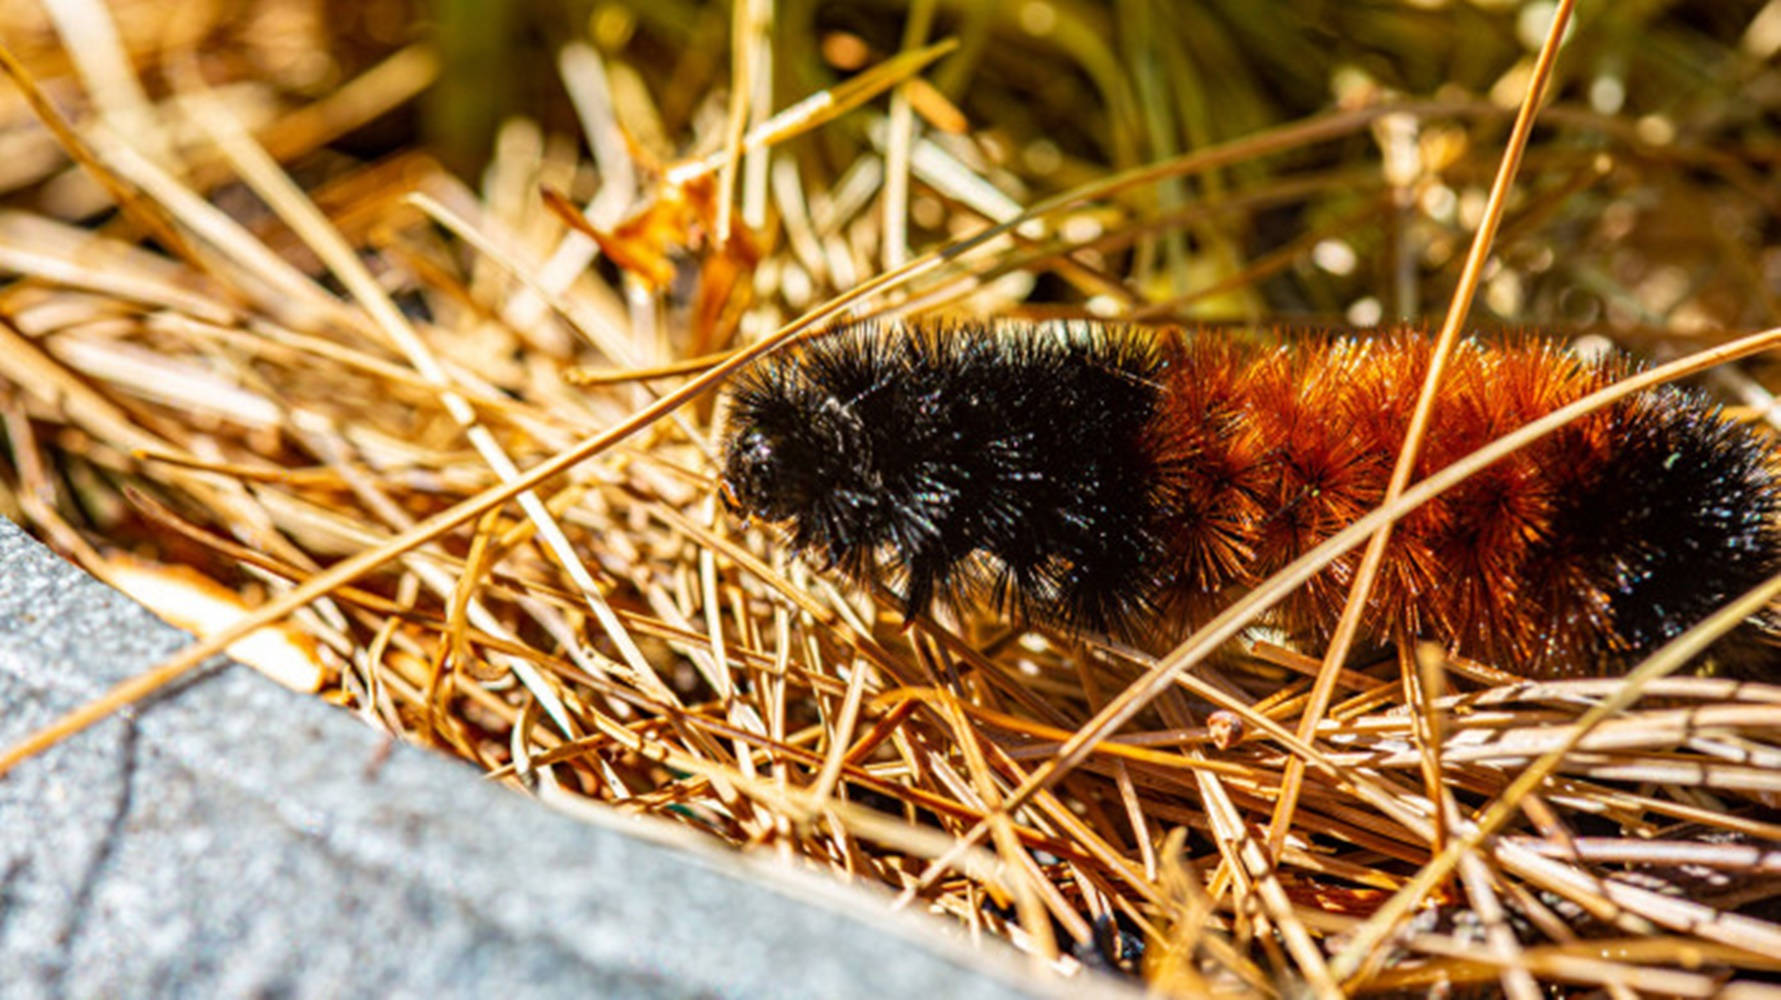 Striking Caterpillar Close-up Amidst Haystack